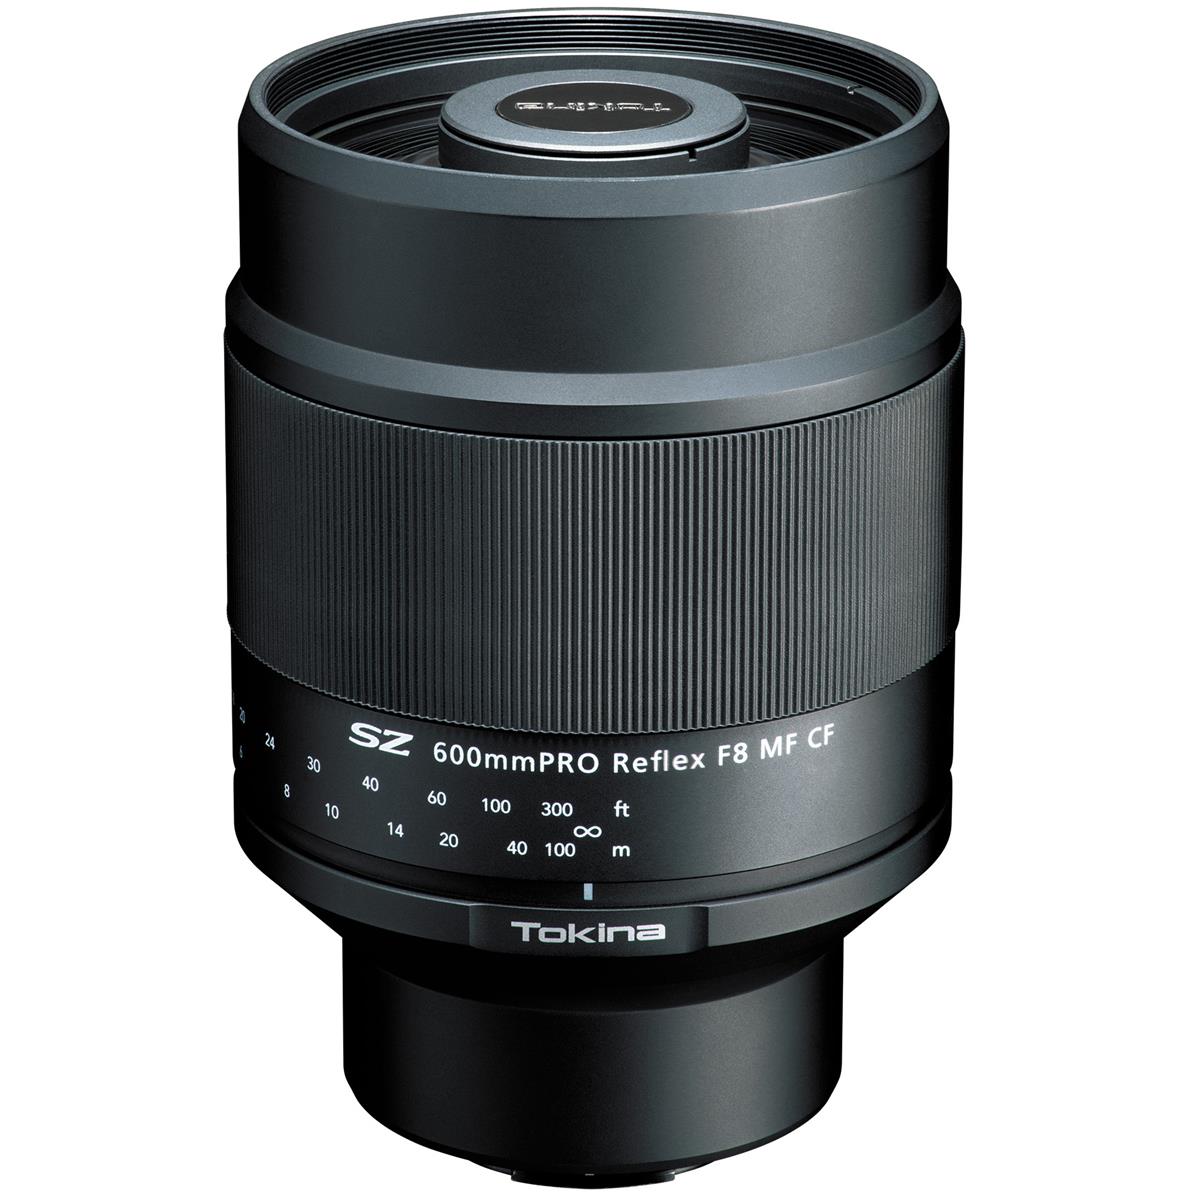 

Tokina SZ PRO 600mm f/8 Reflex MF CF Lens for Canon EF-M, Black